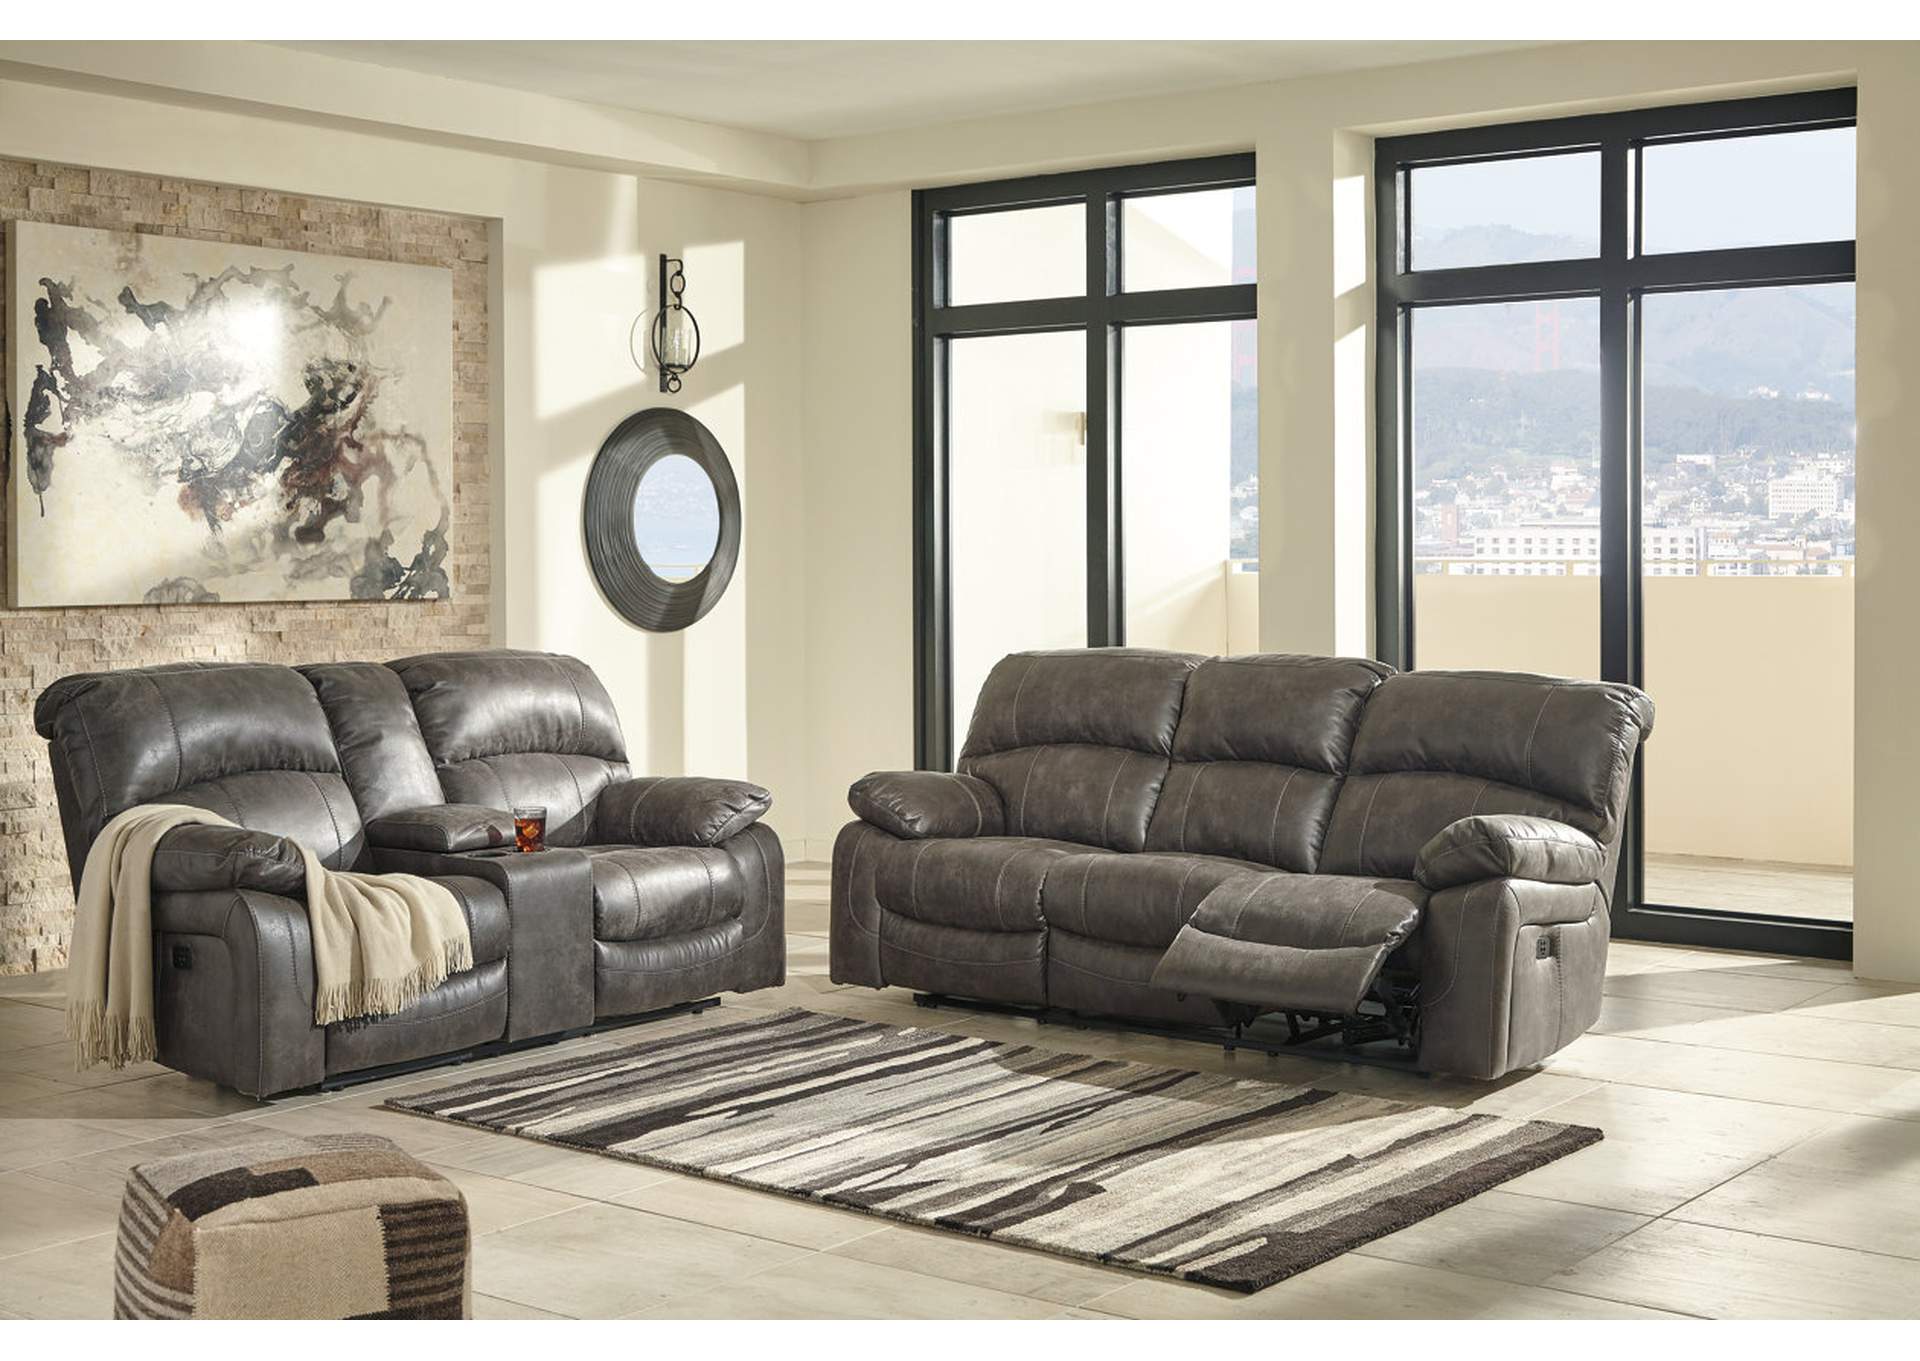 major discount furniture dunwell steel power reclining sofa & loveseat